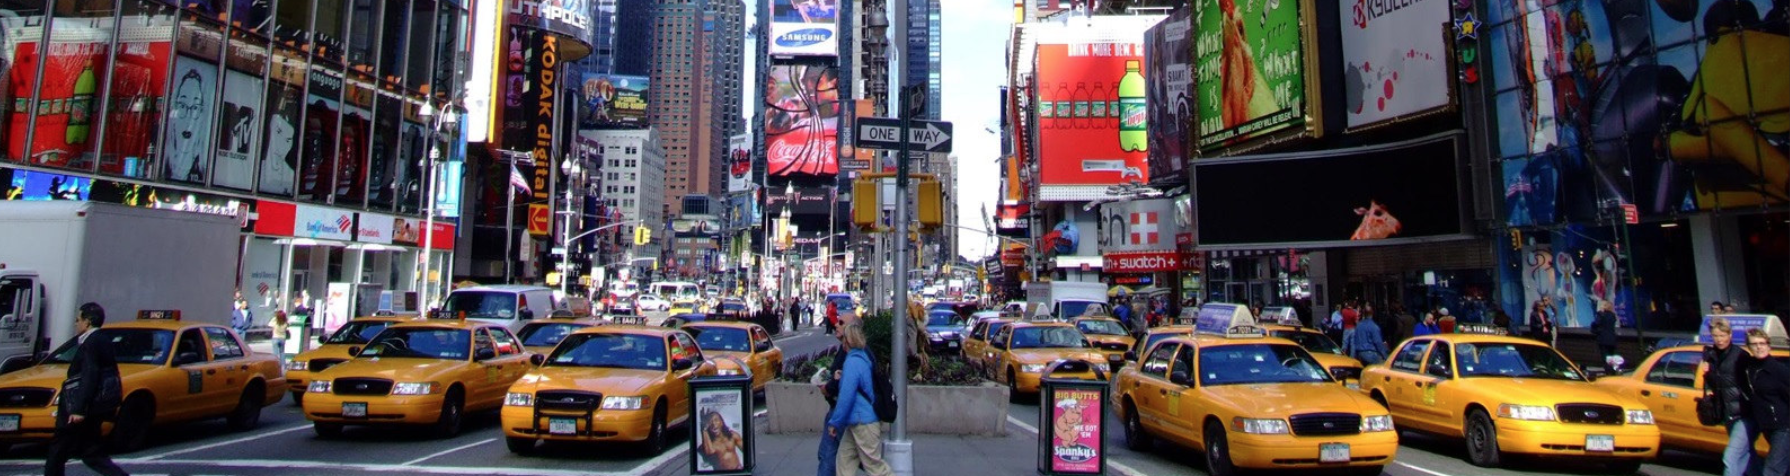 Photo of New York City street 